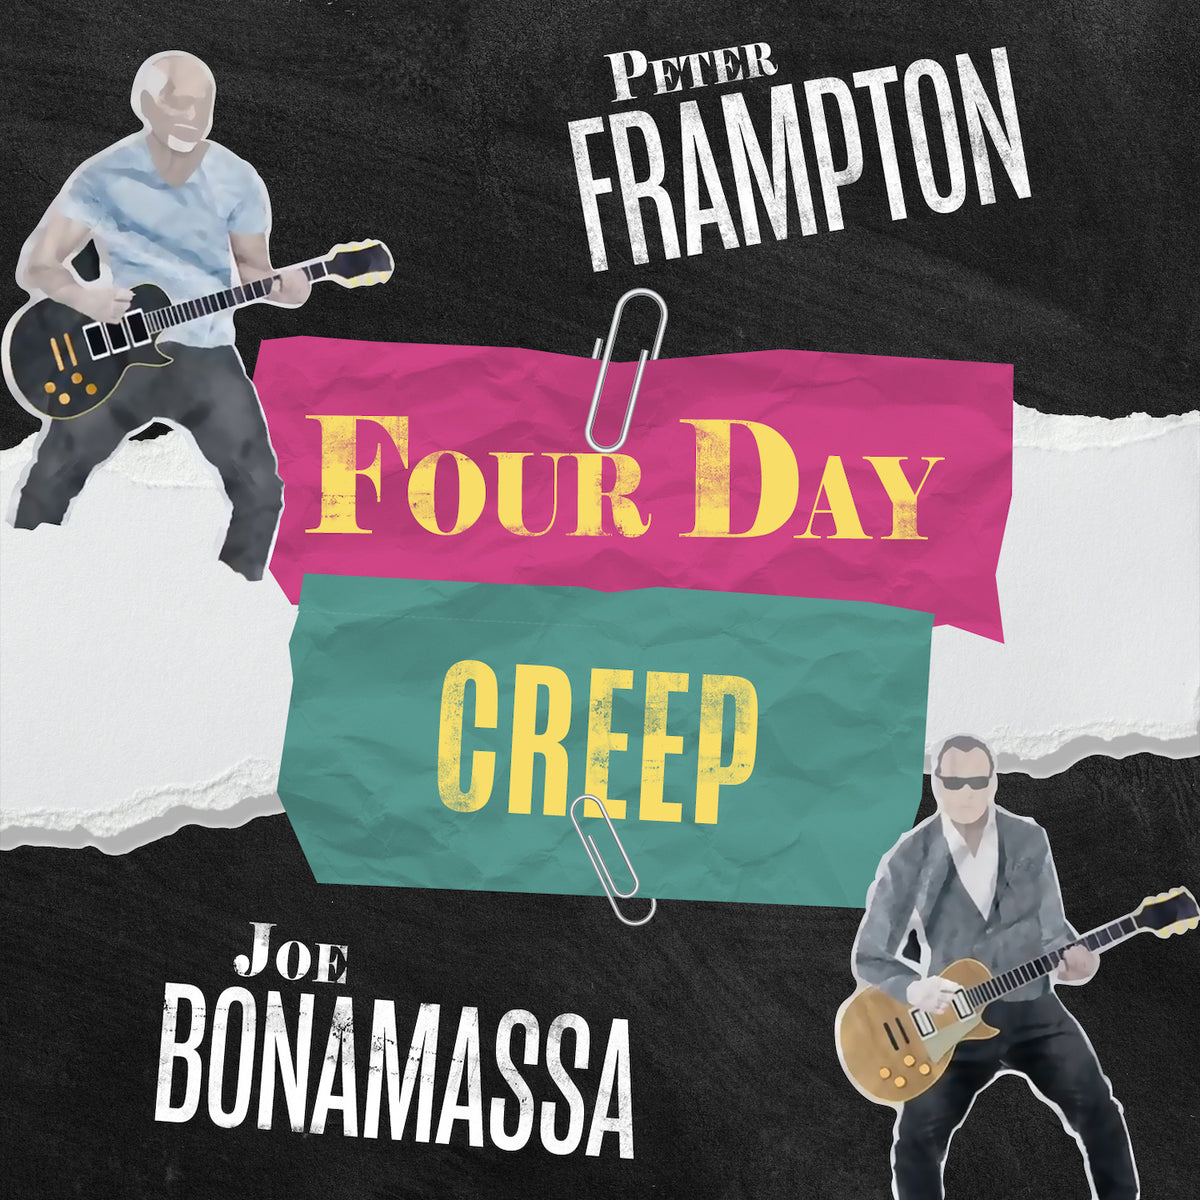 Four Day Creep - Joe Bonamassa & Peter Frampton - Single